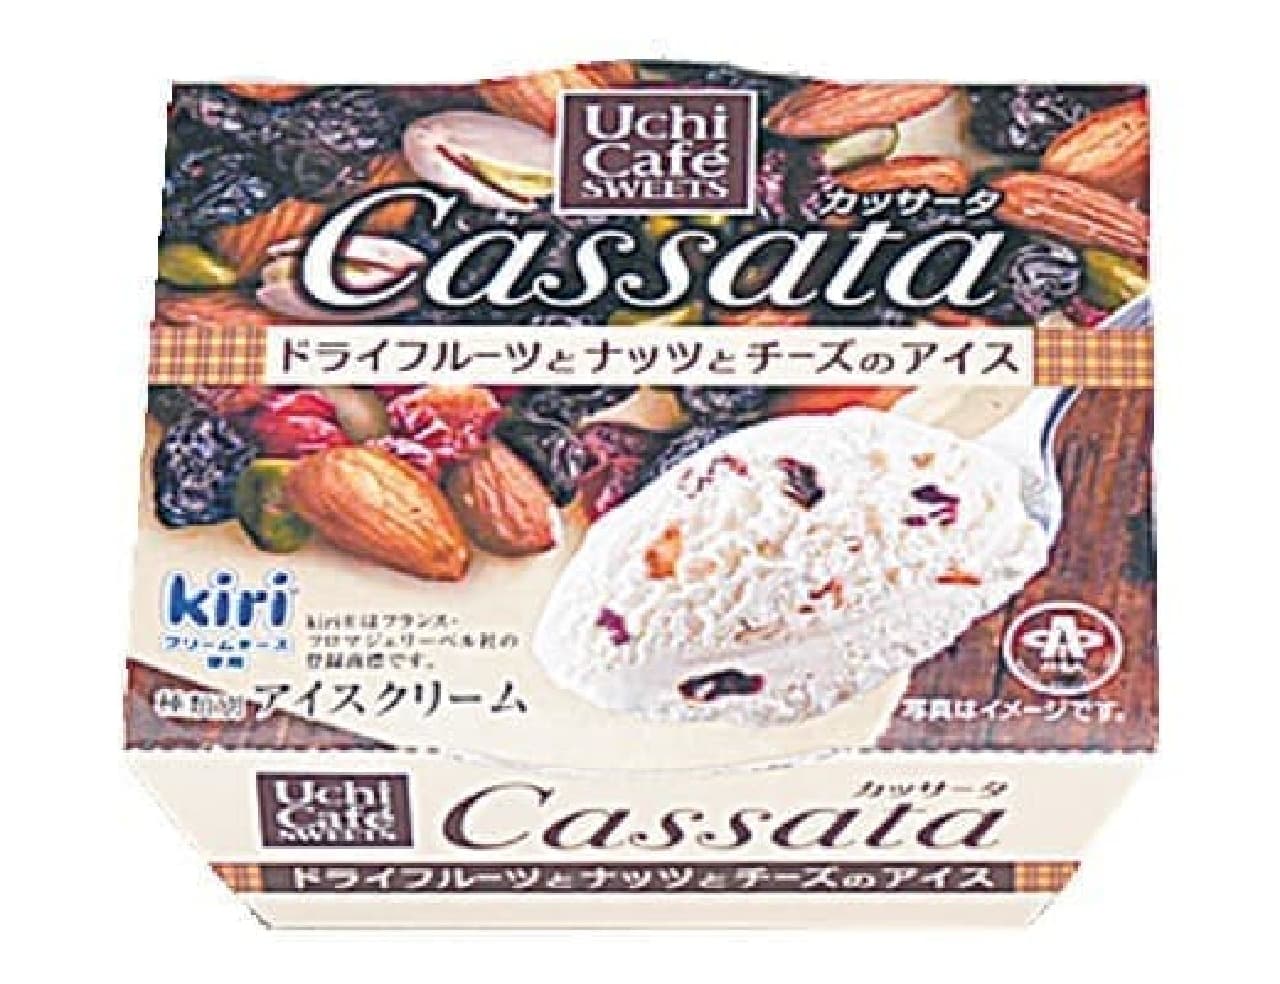 Uchi Cafe Cassata